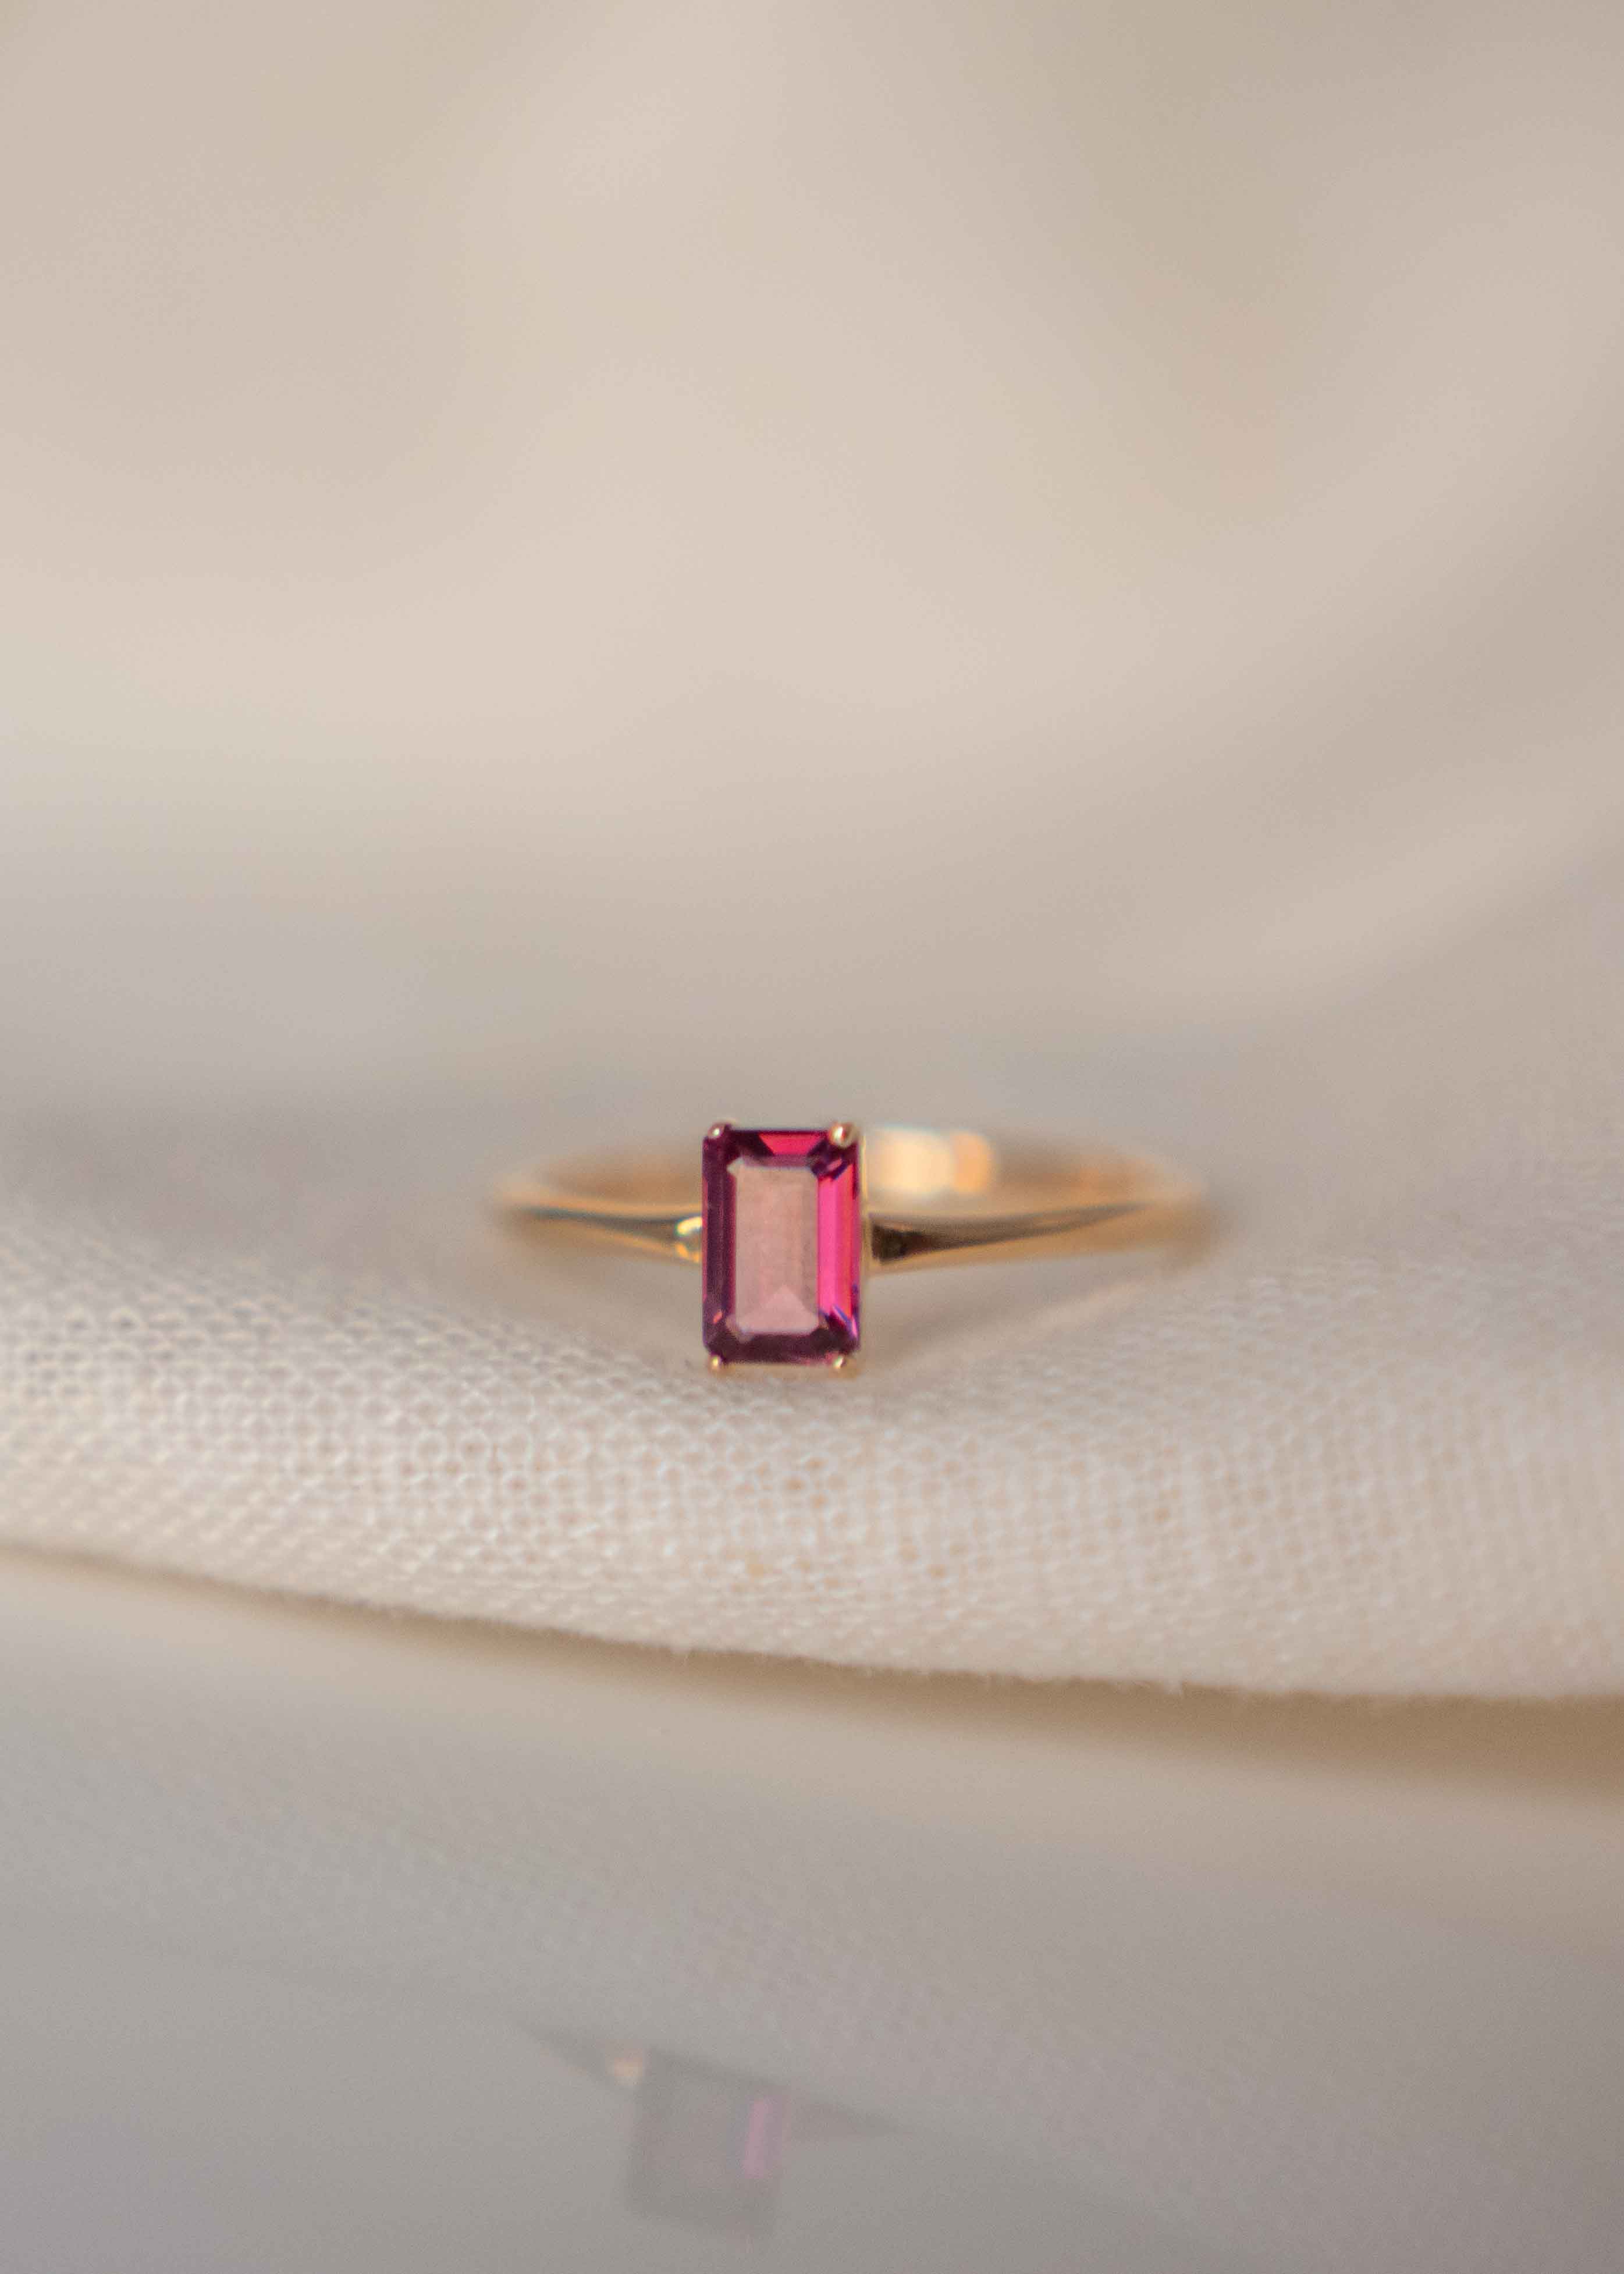 Rhodolite Garnet January Birthstone Gold Ring Delicate Minimal Genuine Gemstone Gifts for Women